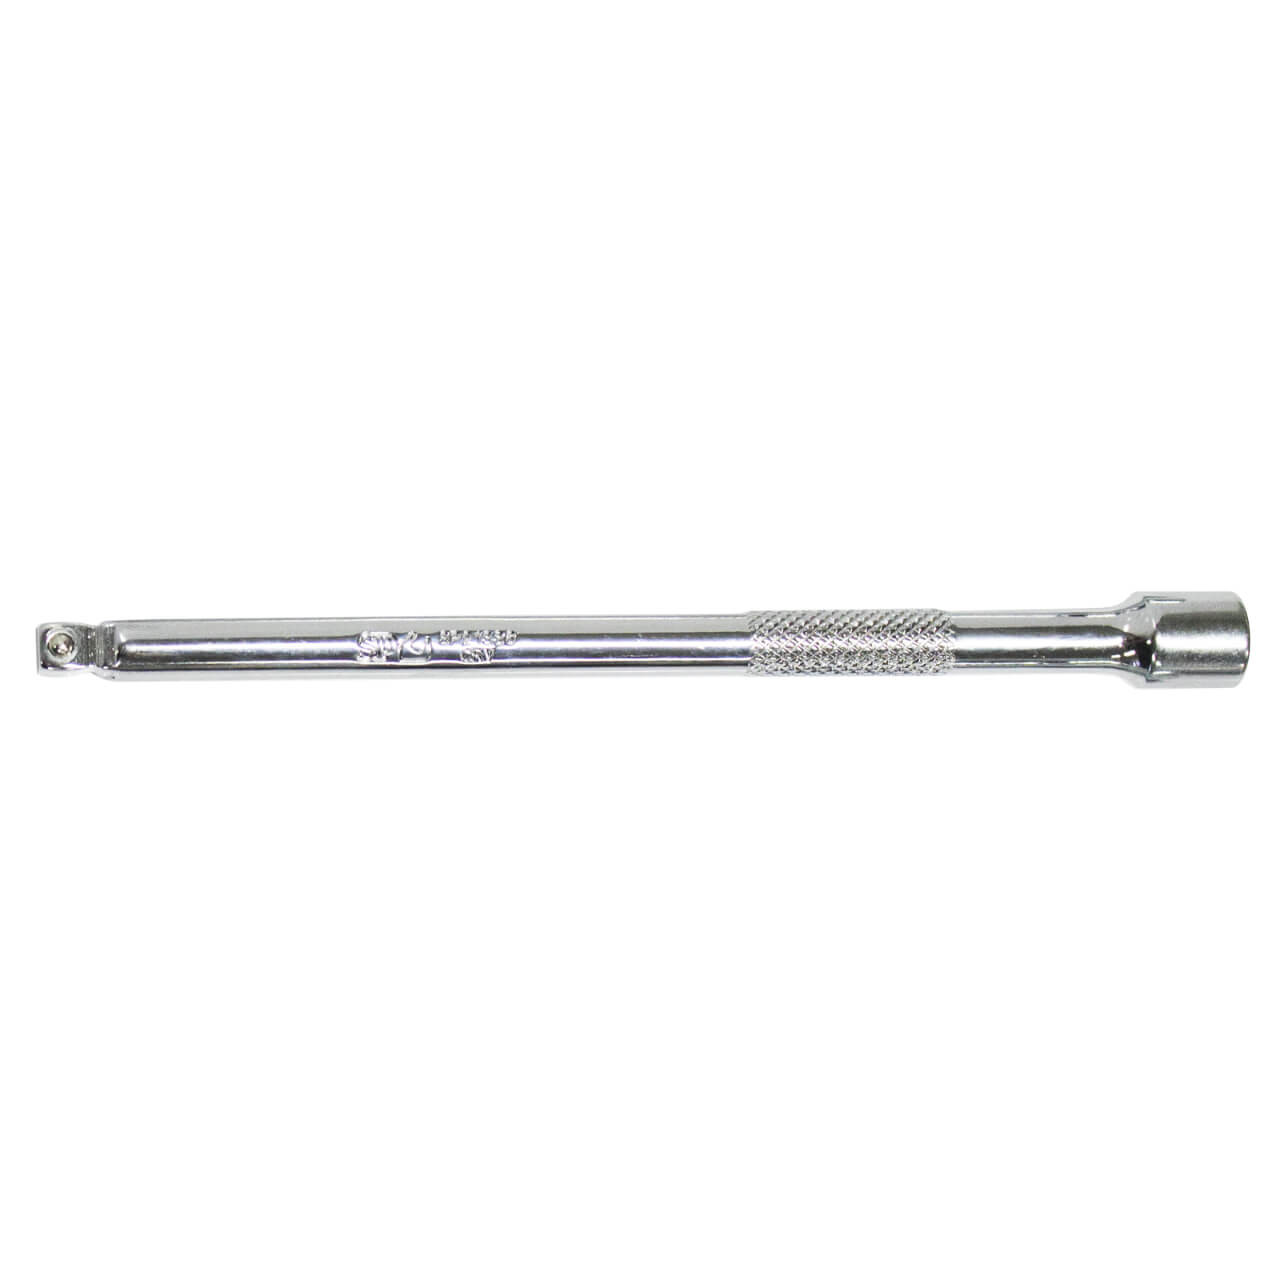 SP Tools 1/4 Dr x 150mm Wobble Extension Bar